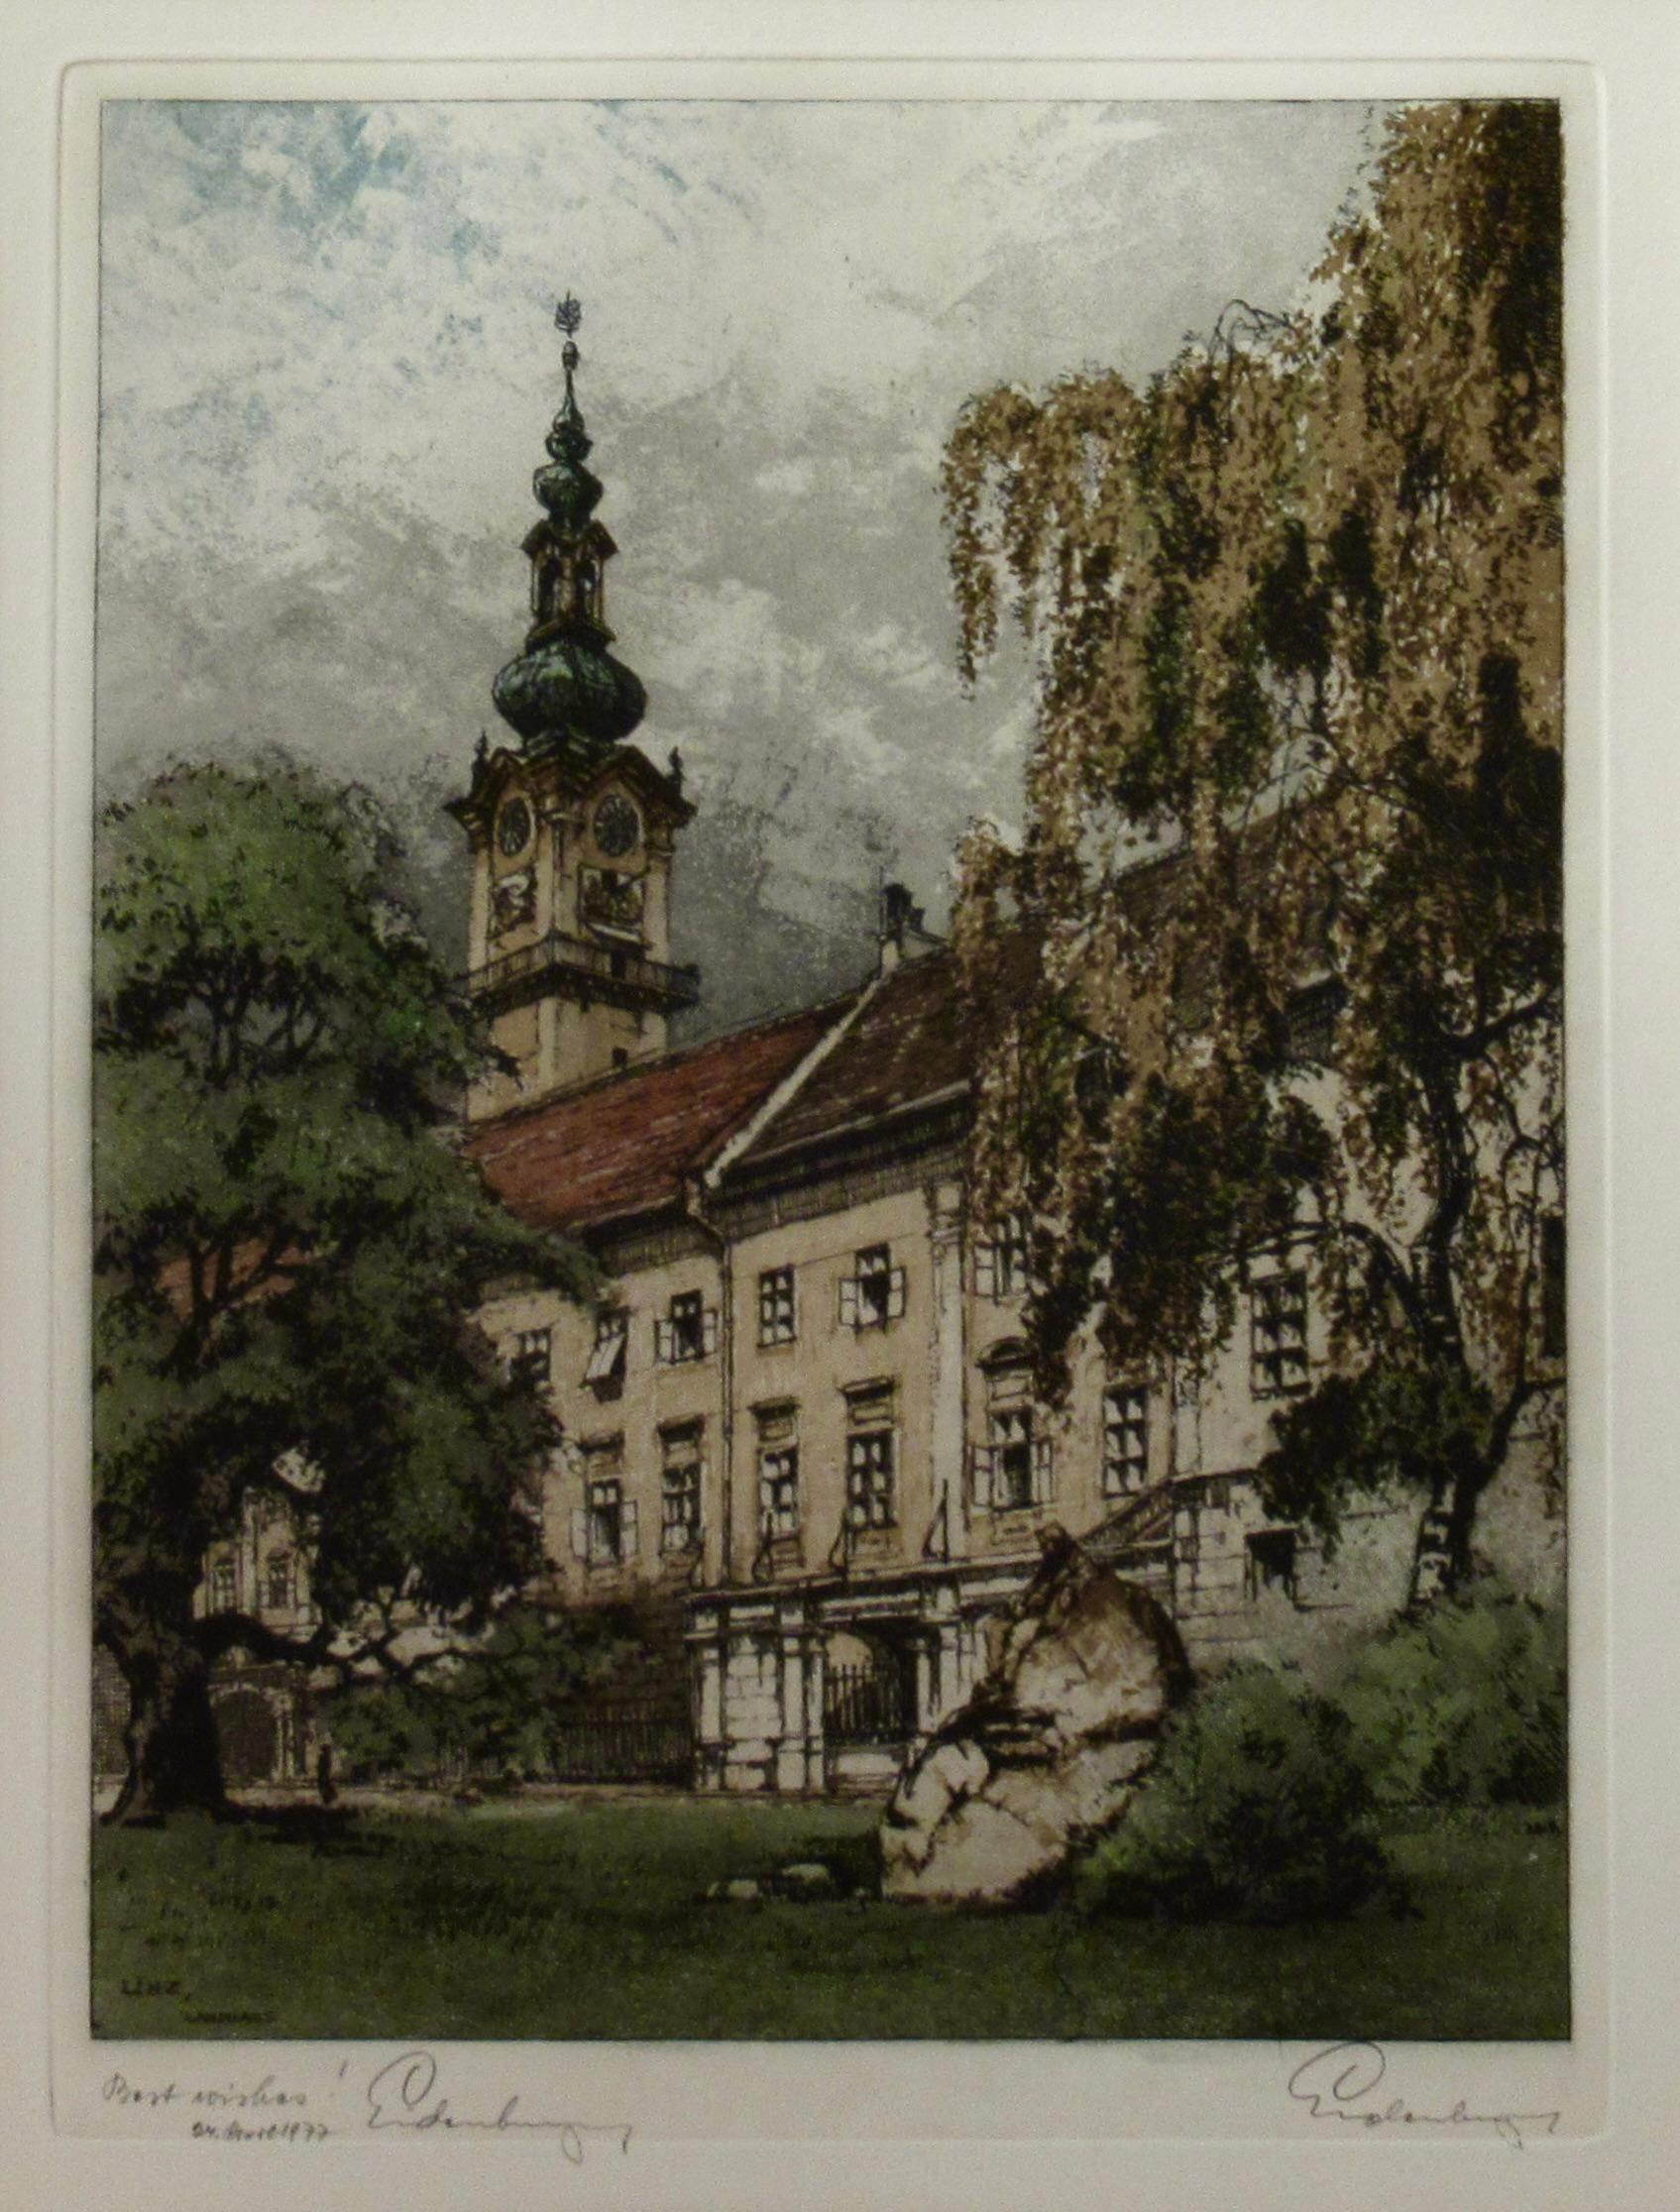 Linz Landhaus, Austria - Print by Josef Eidenberger